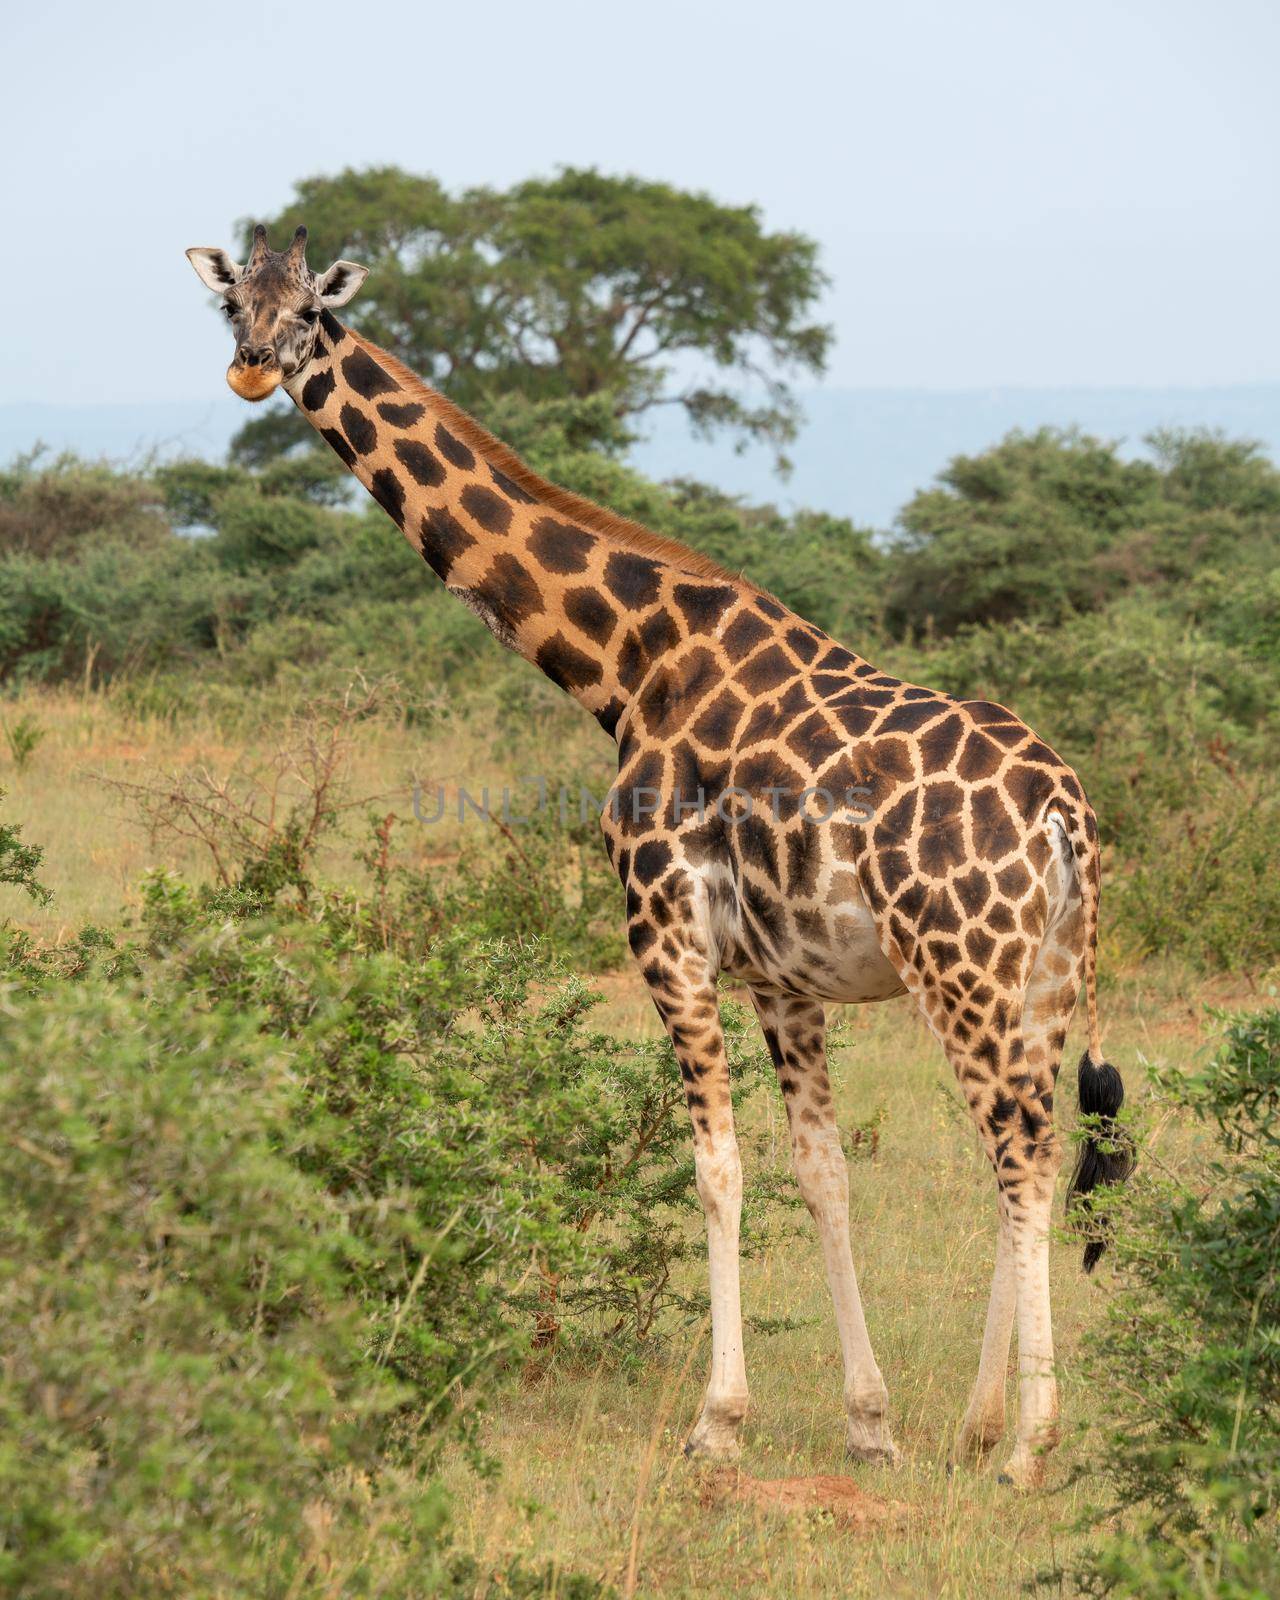 Baringo Giraffe, Giraffa camelopardalis by alfotokunst